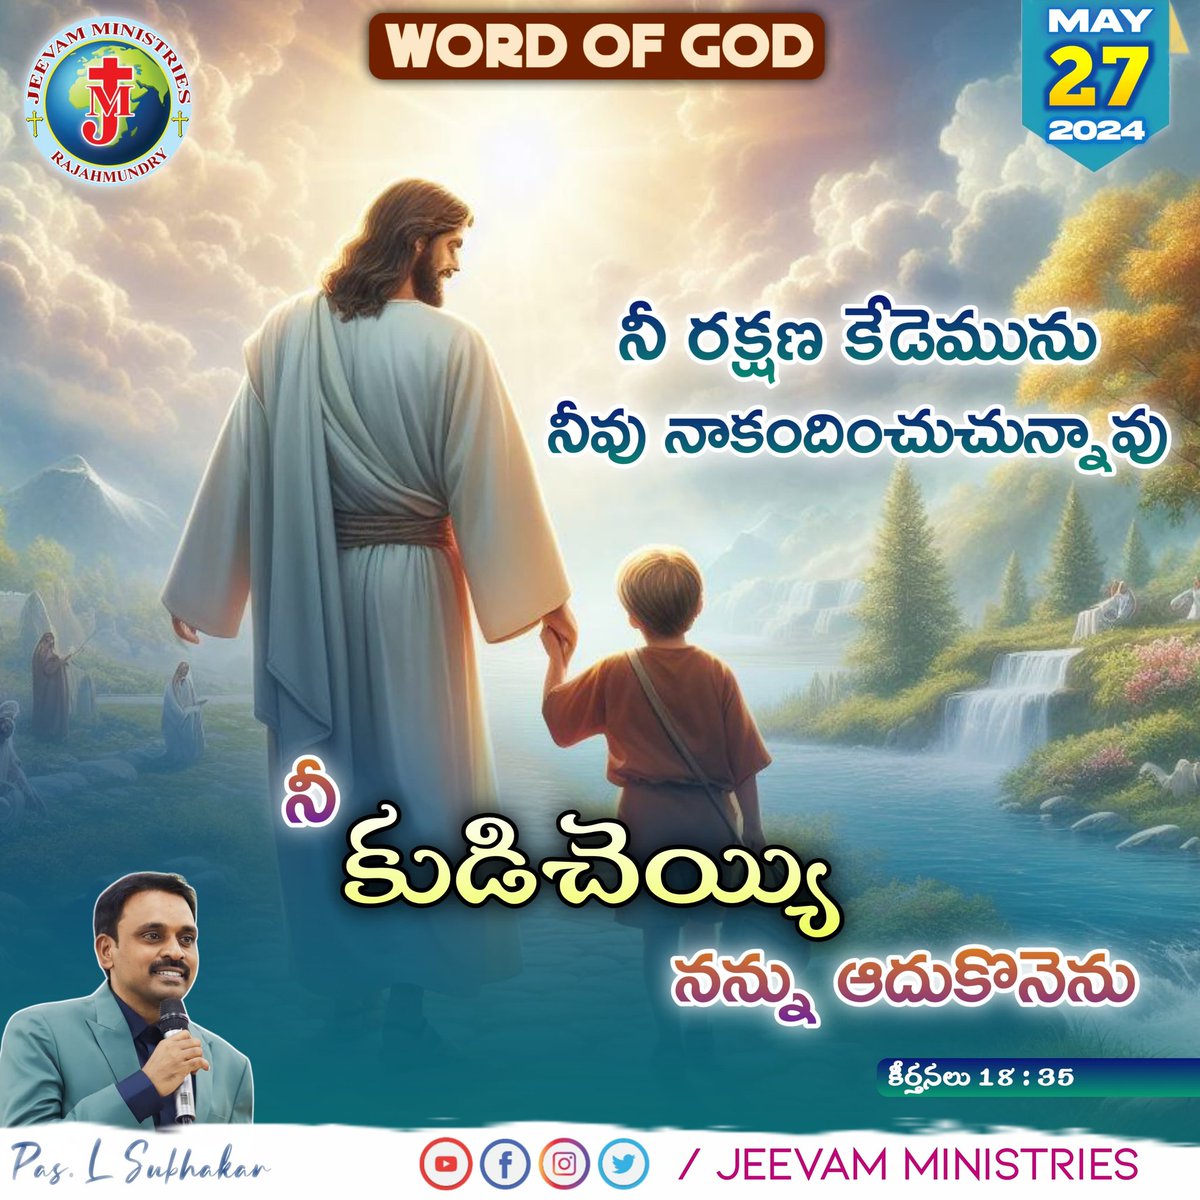 Today's Word of God 🙏
#dailybibleverse✝️ #TeluguBible #Pastor #SUBHAKAR
#JEEVAMMINISTRIES 
#Rajahmundry 
#mondaymotivation #27May2024